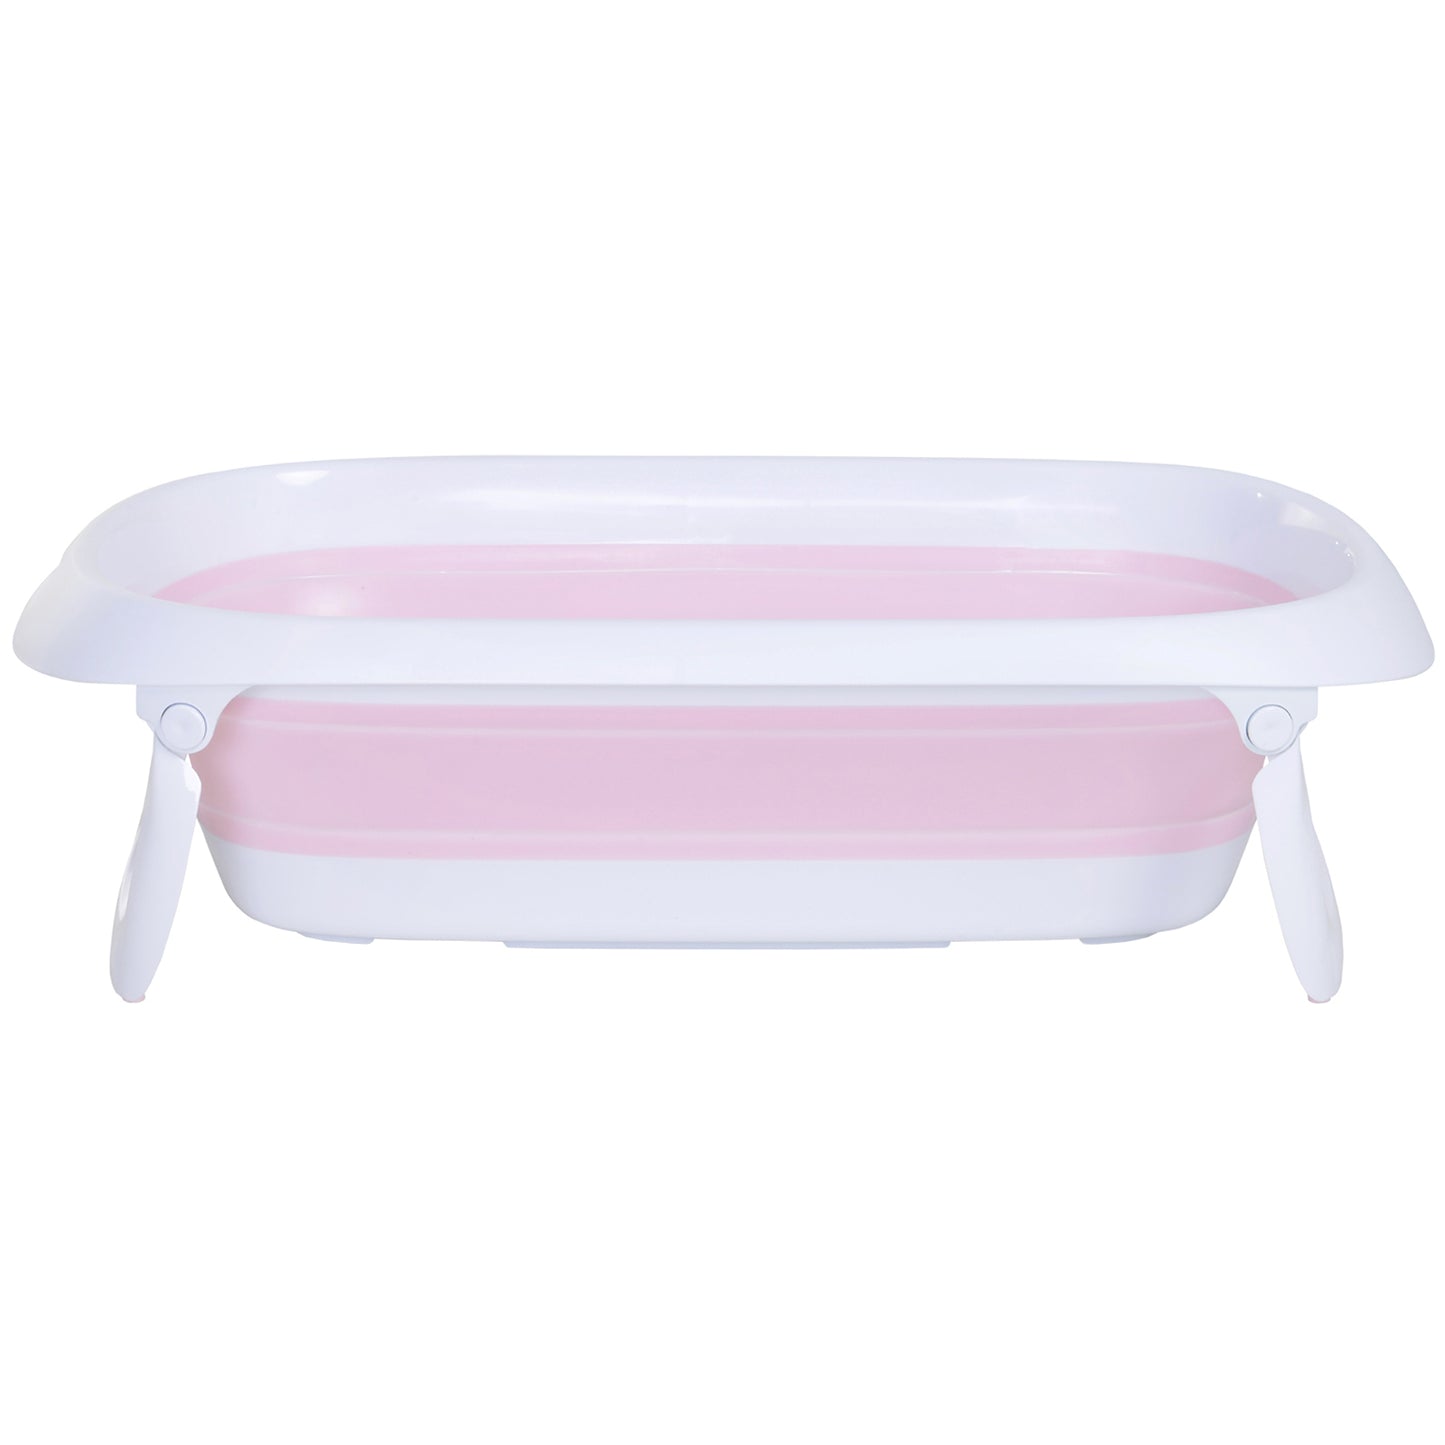 HOMCOM Folding Portable Baby Bathtub Safety Shower w/ Anti-Slip Comfortable Washer Pink